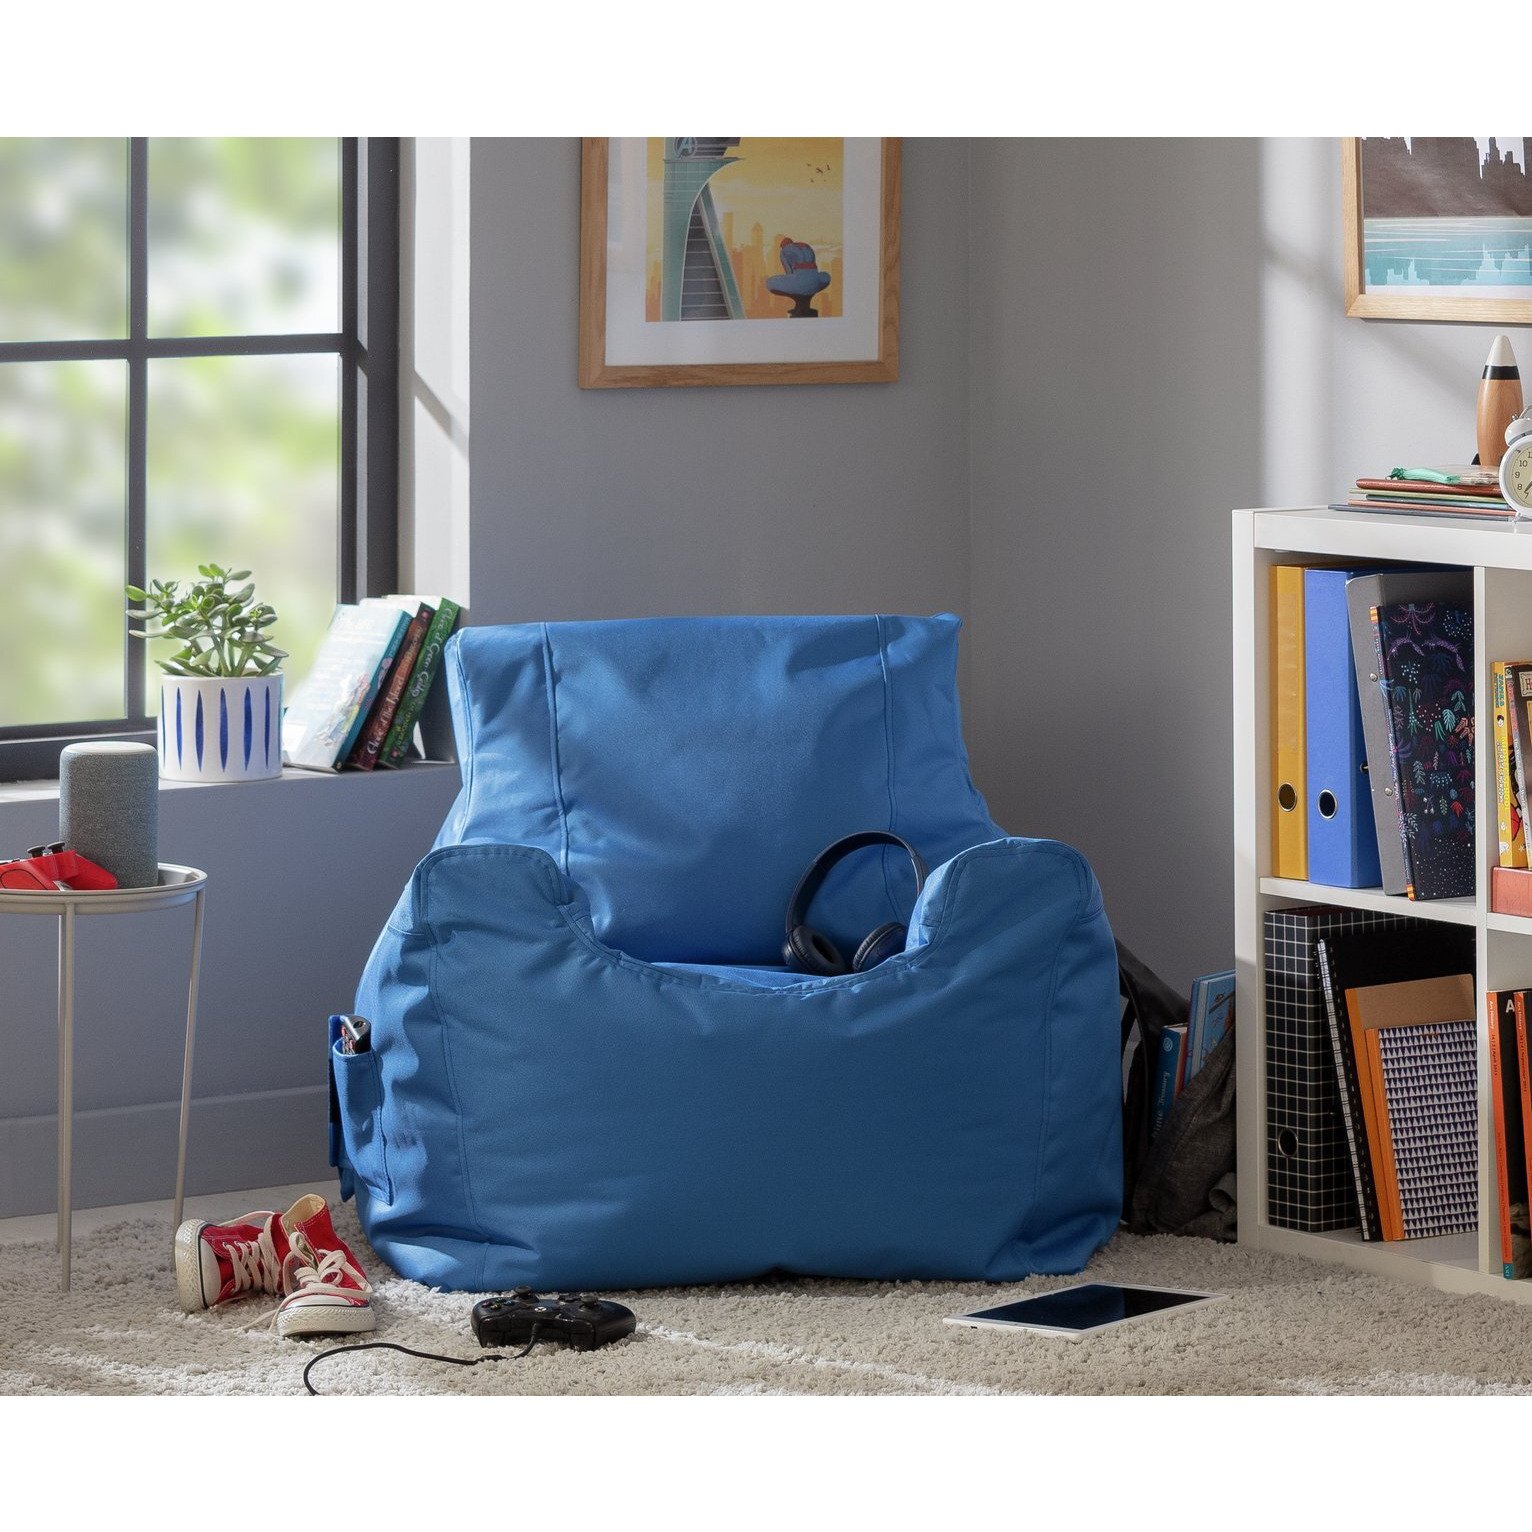 Kaikoo Large Blue Teenager Bean Bag Chair - image 1